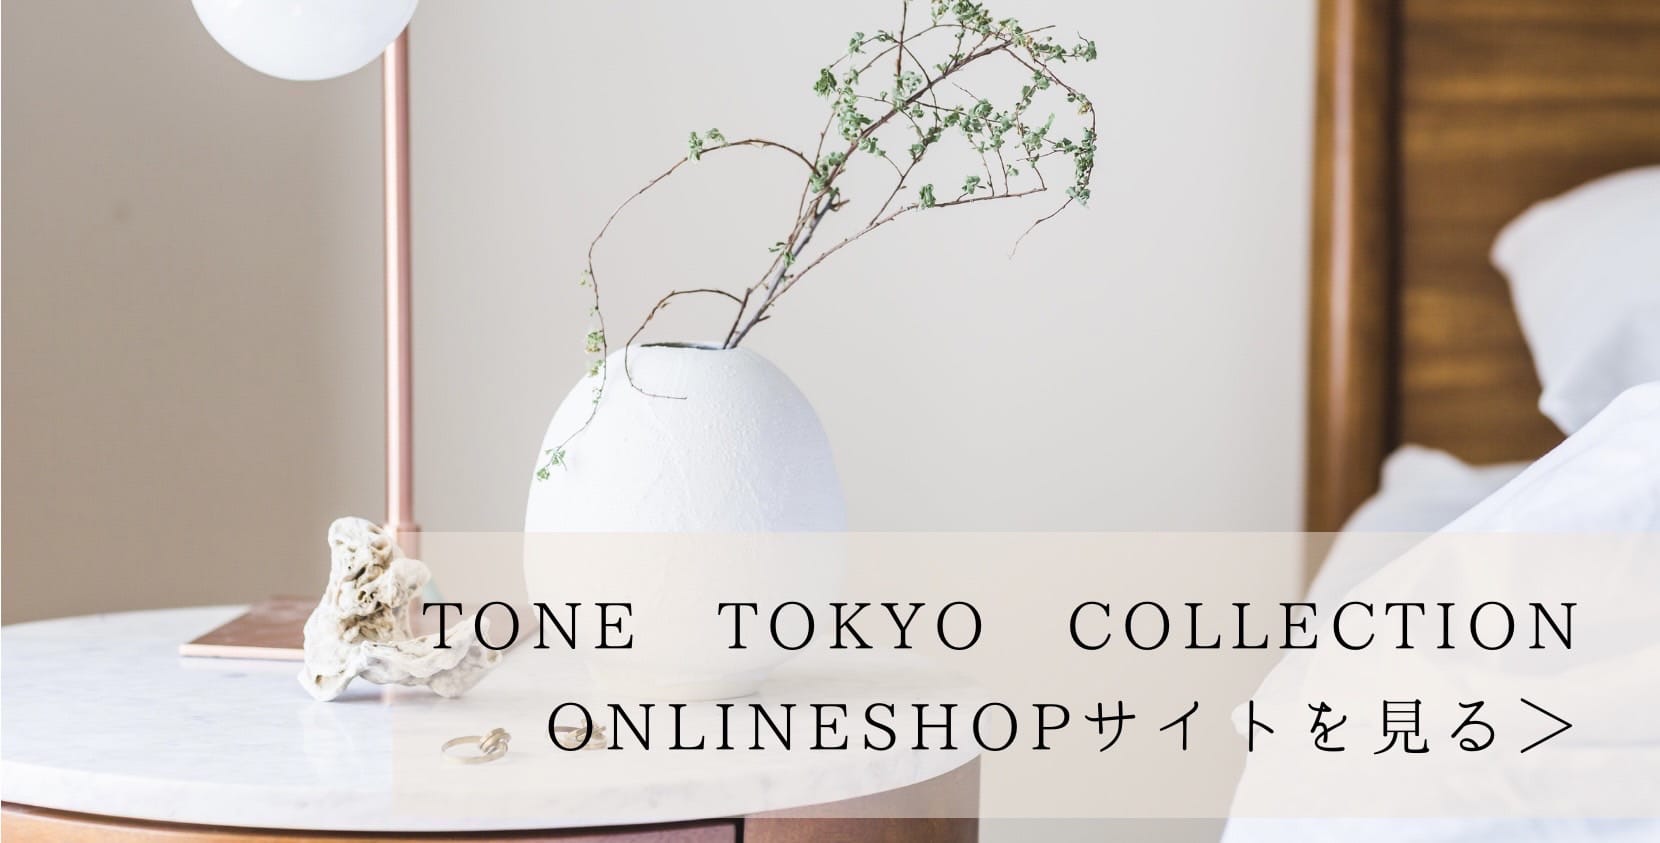 TONE TOKYO COLLECTION ONLINESHOPサイトを見る